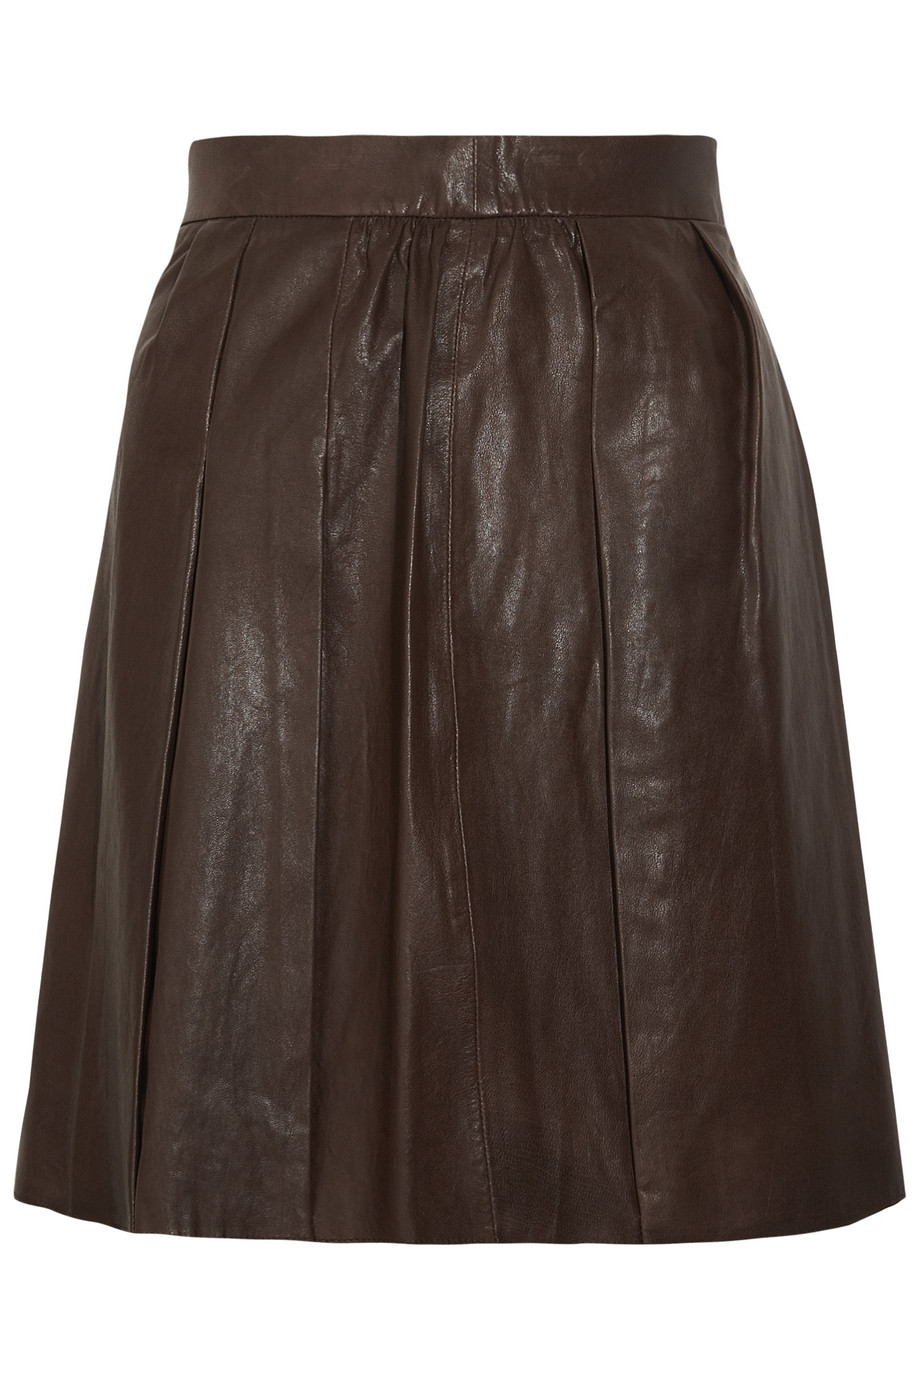 Vince Leather Mini Skirt in Dark Brown (Brown) - Lyst